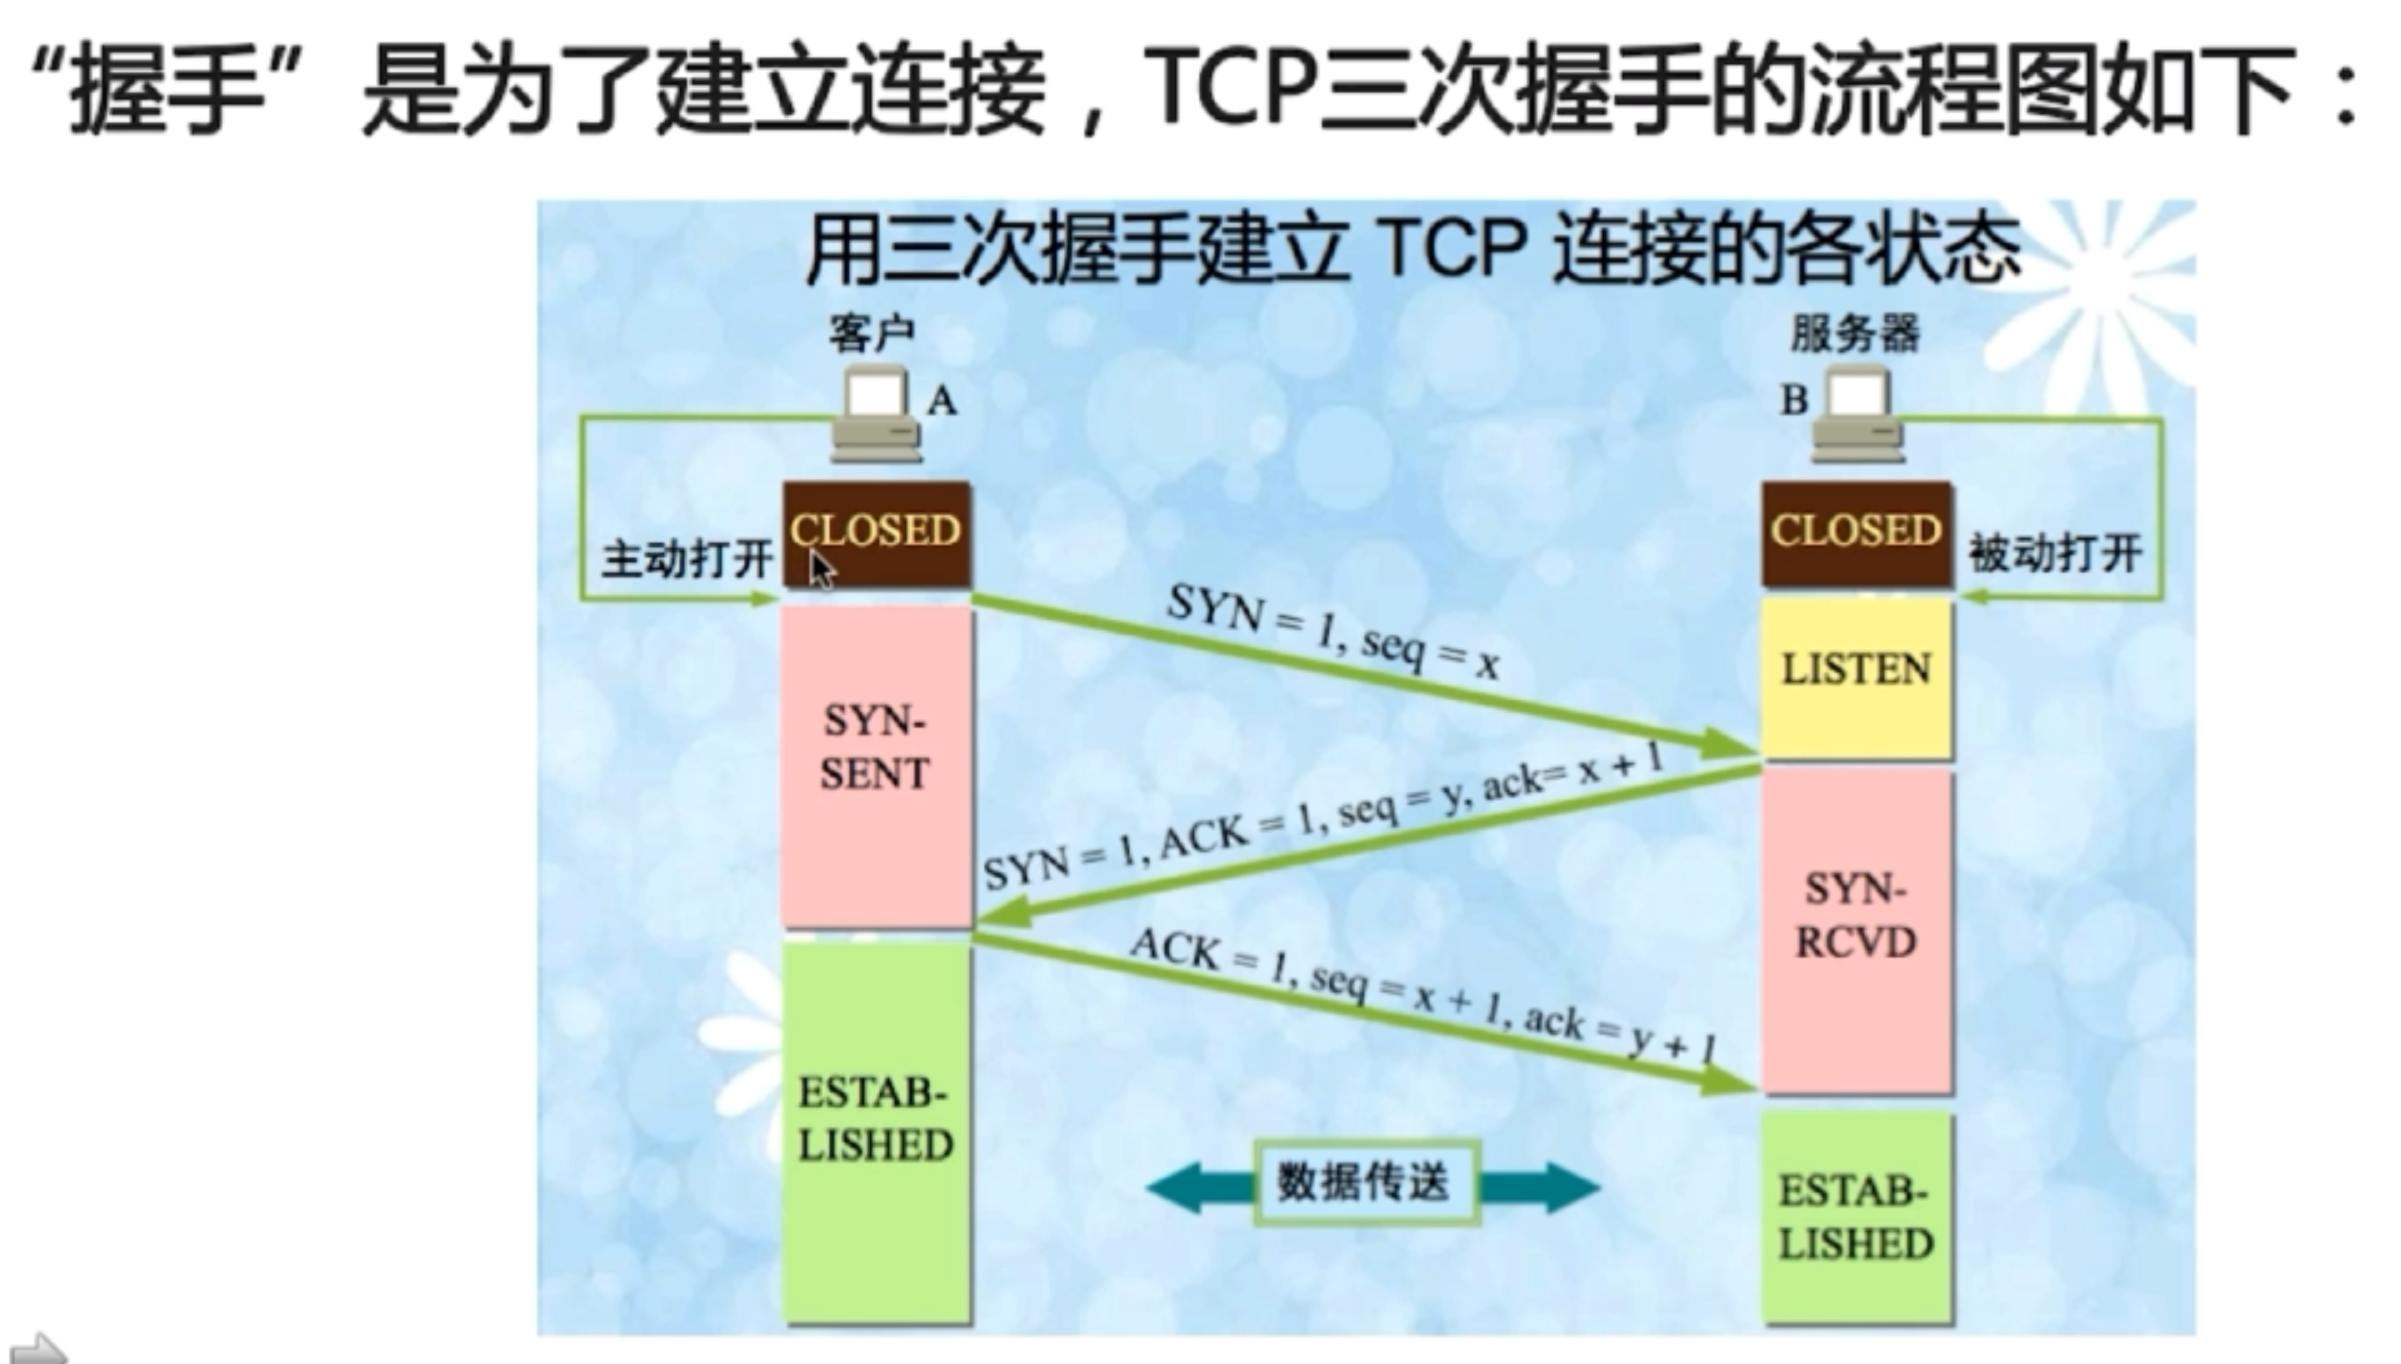 TCP三次握手的流程图